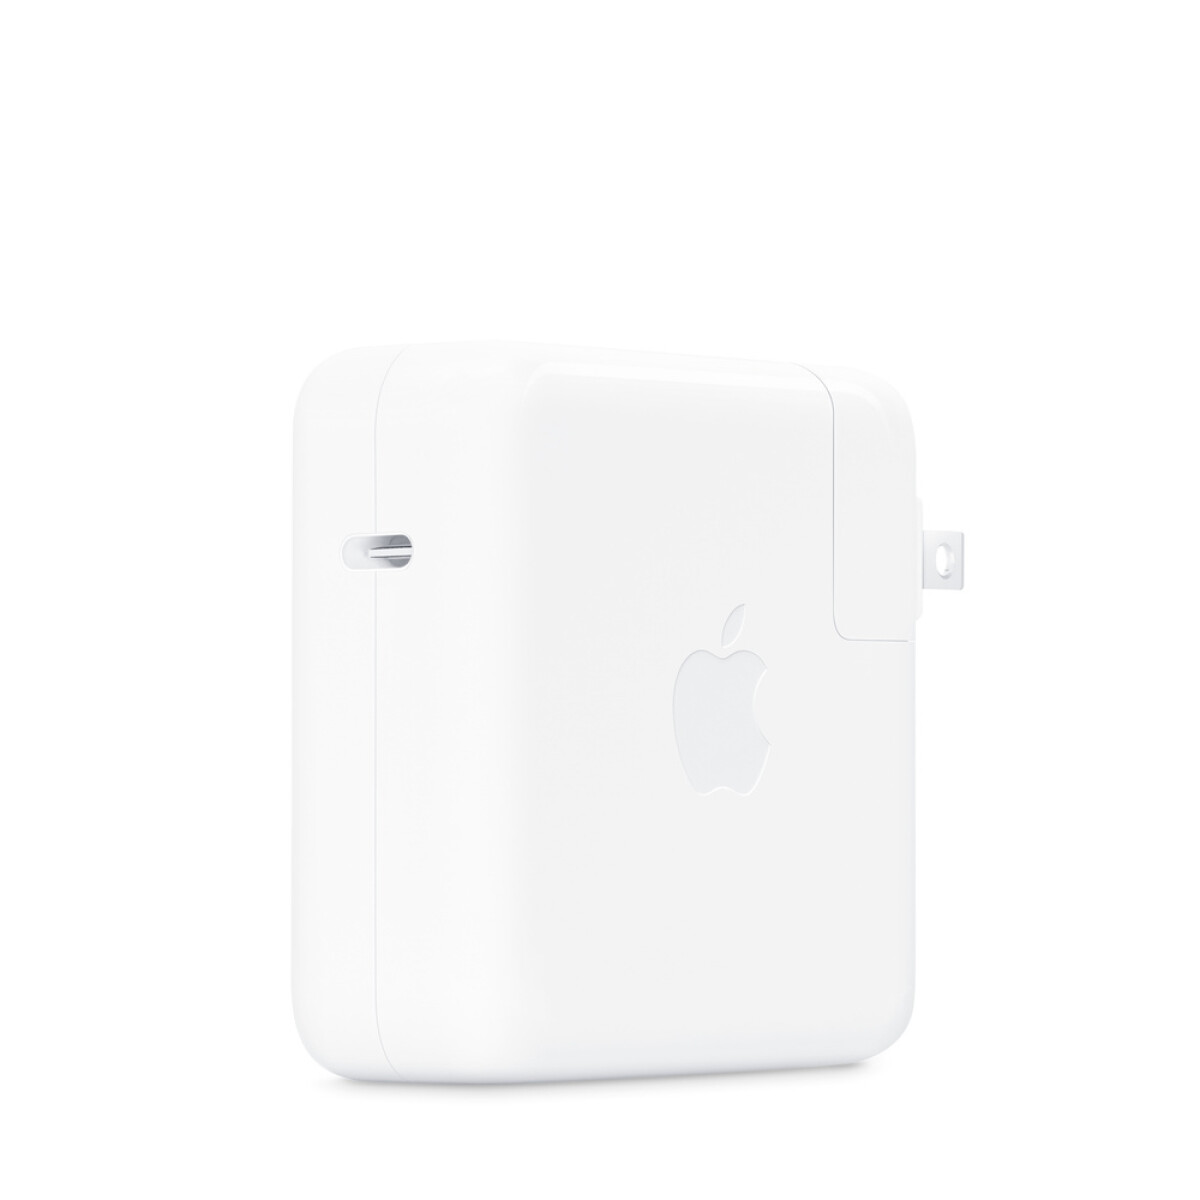 Apple power adapter usb-c 61w - White 